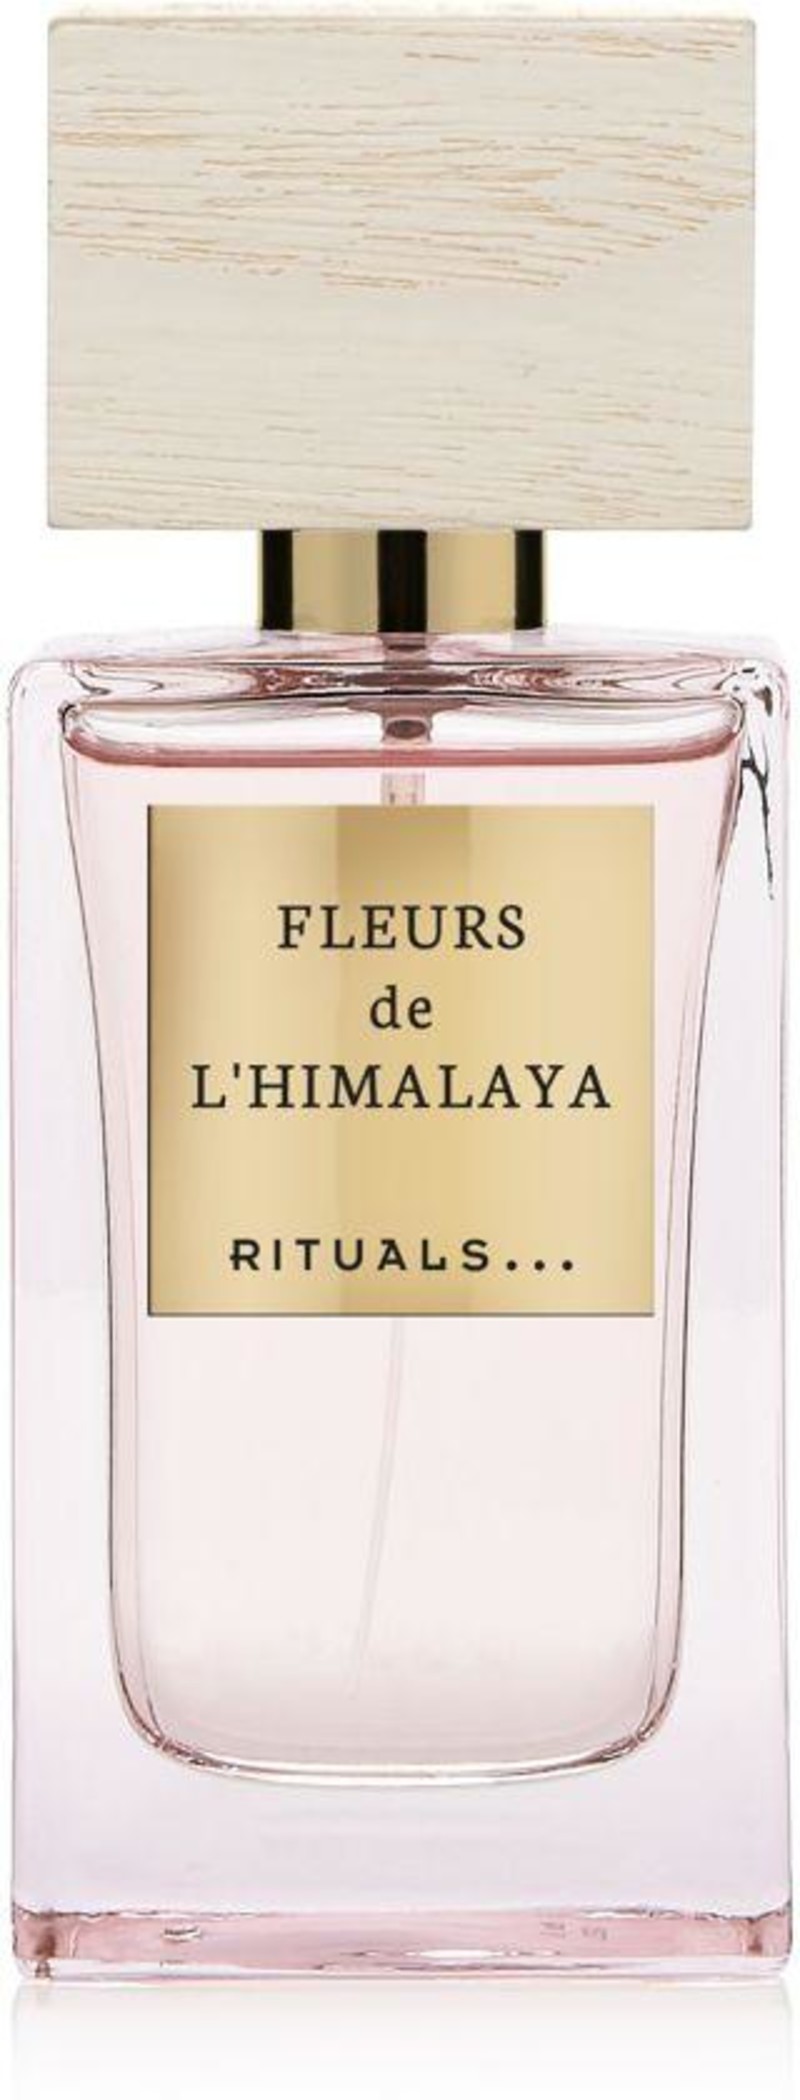 RITUALS Fleurs de l'Himalaya damesparfum eau de parfum 50 ml, RITUALS